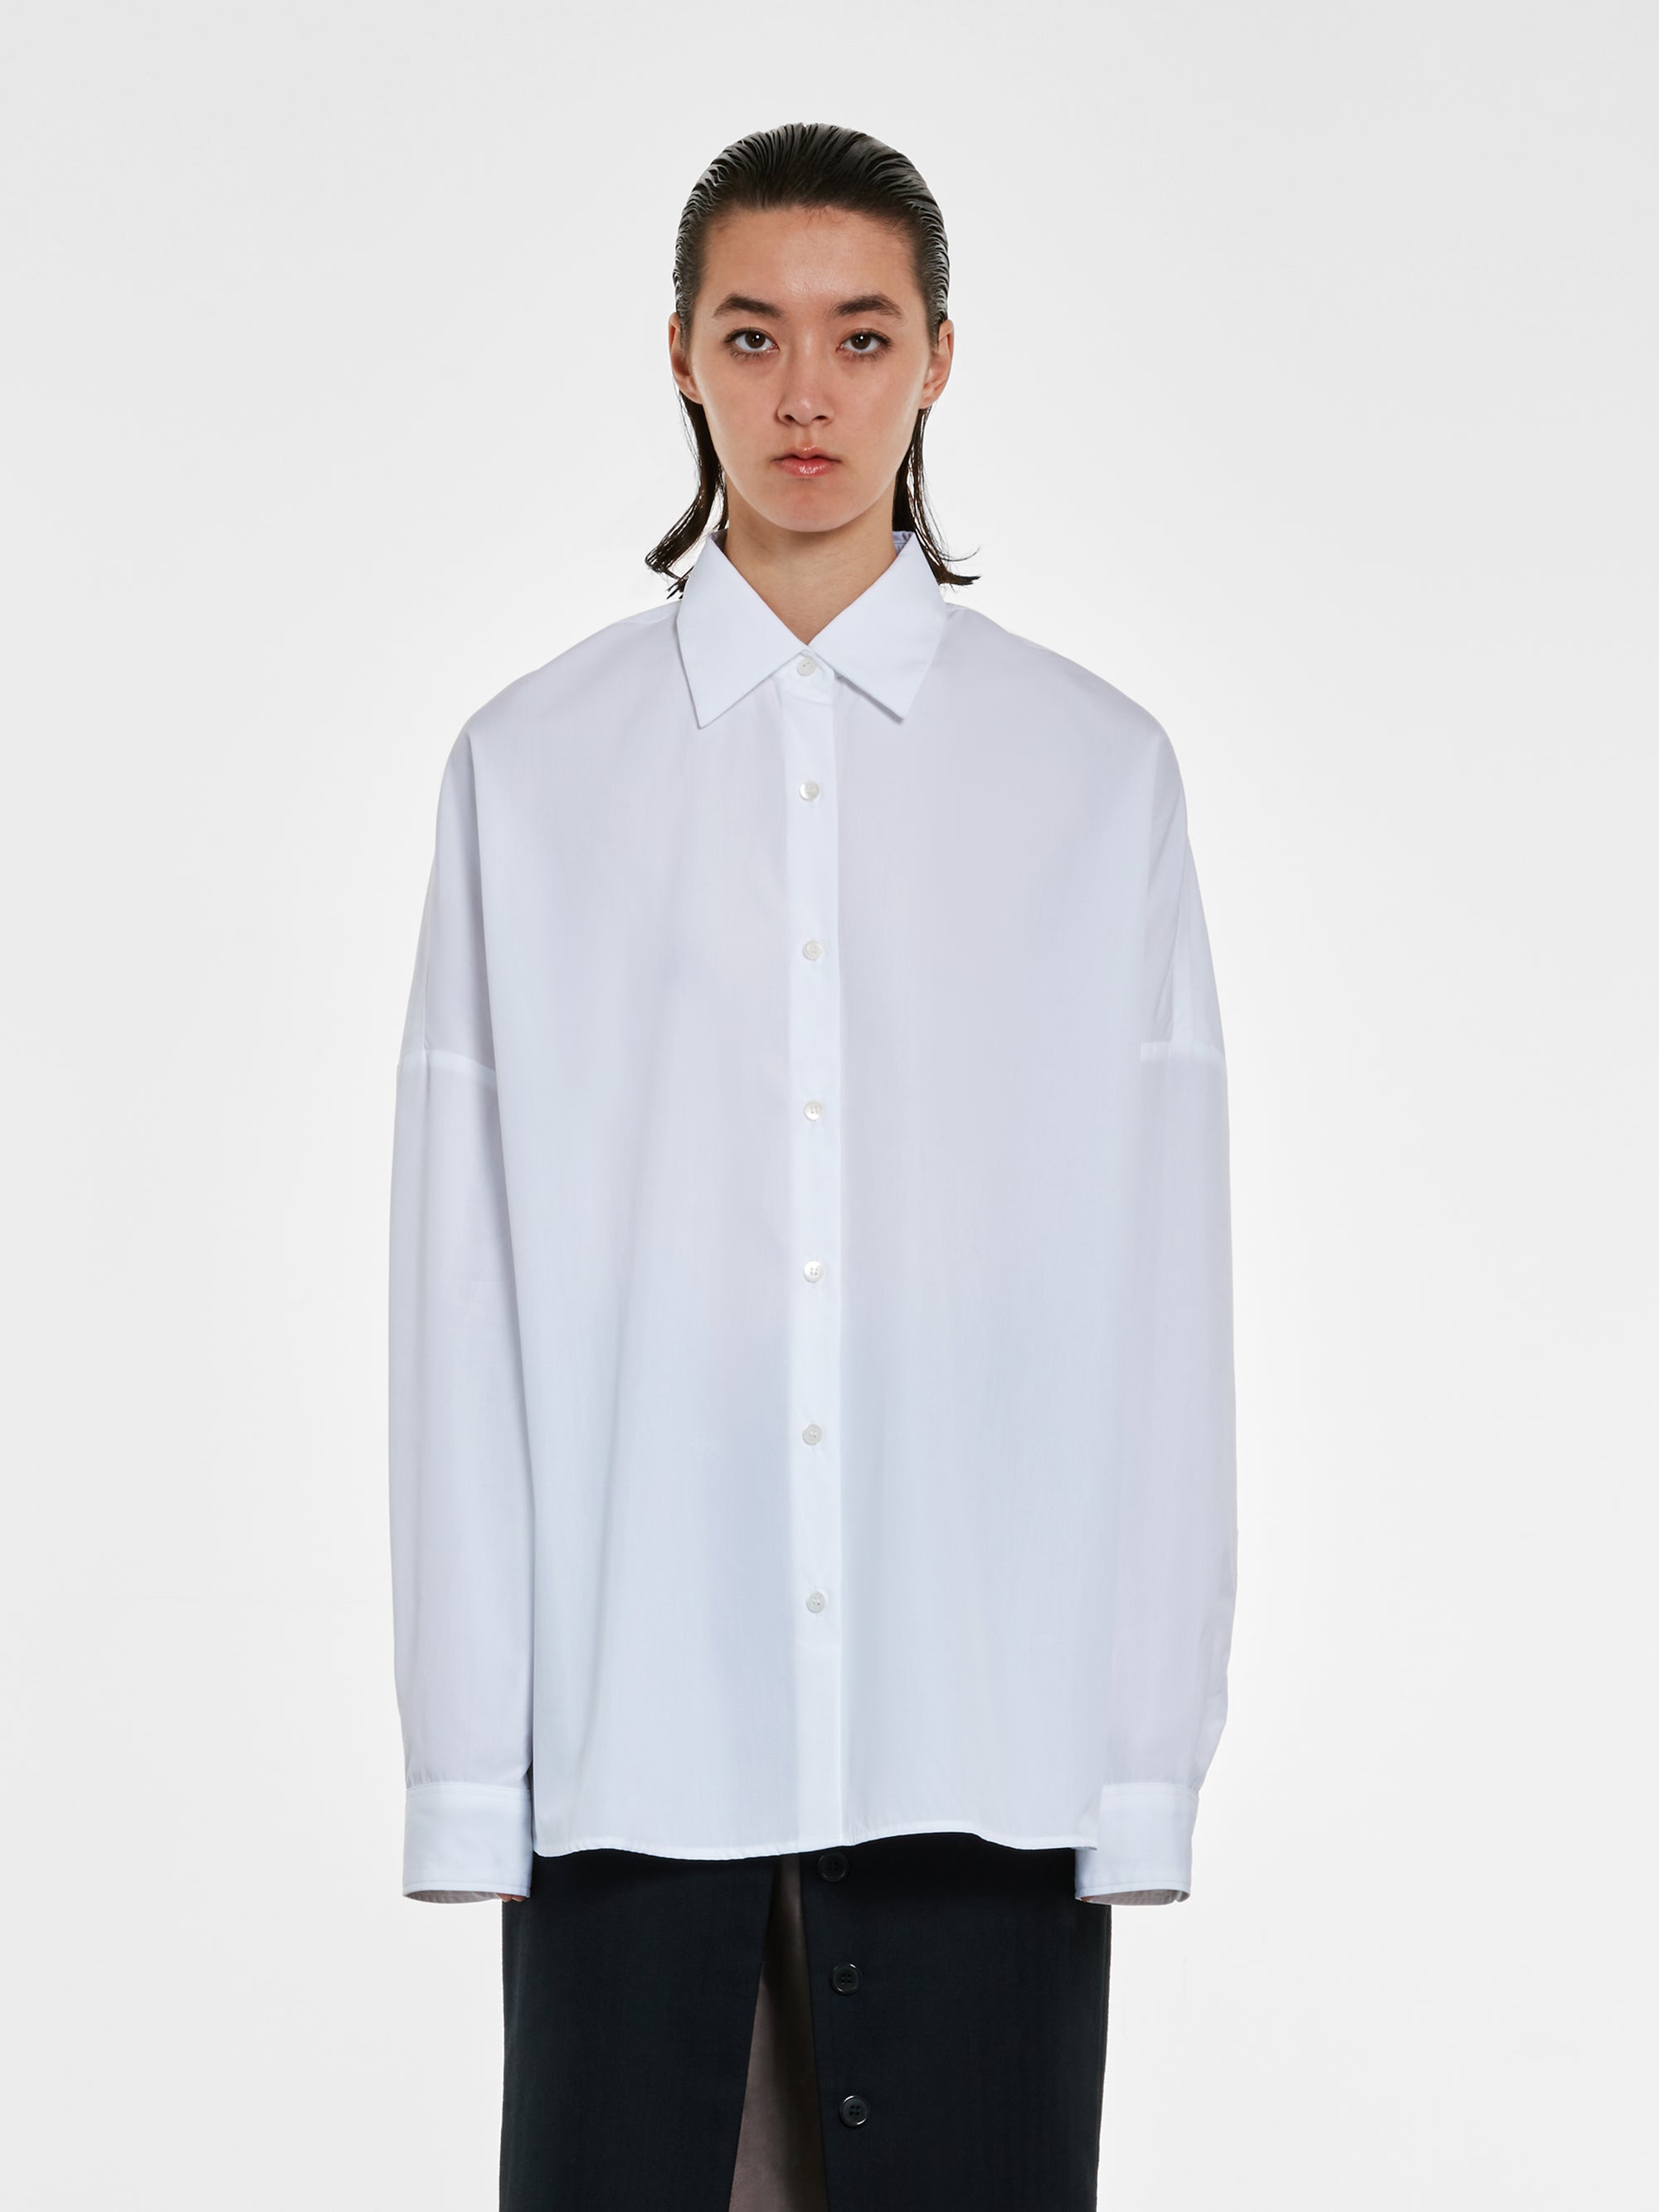 Dries Van Noten - Women’s Cotton Cocoon Shirt - (White) view 1